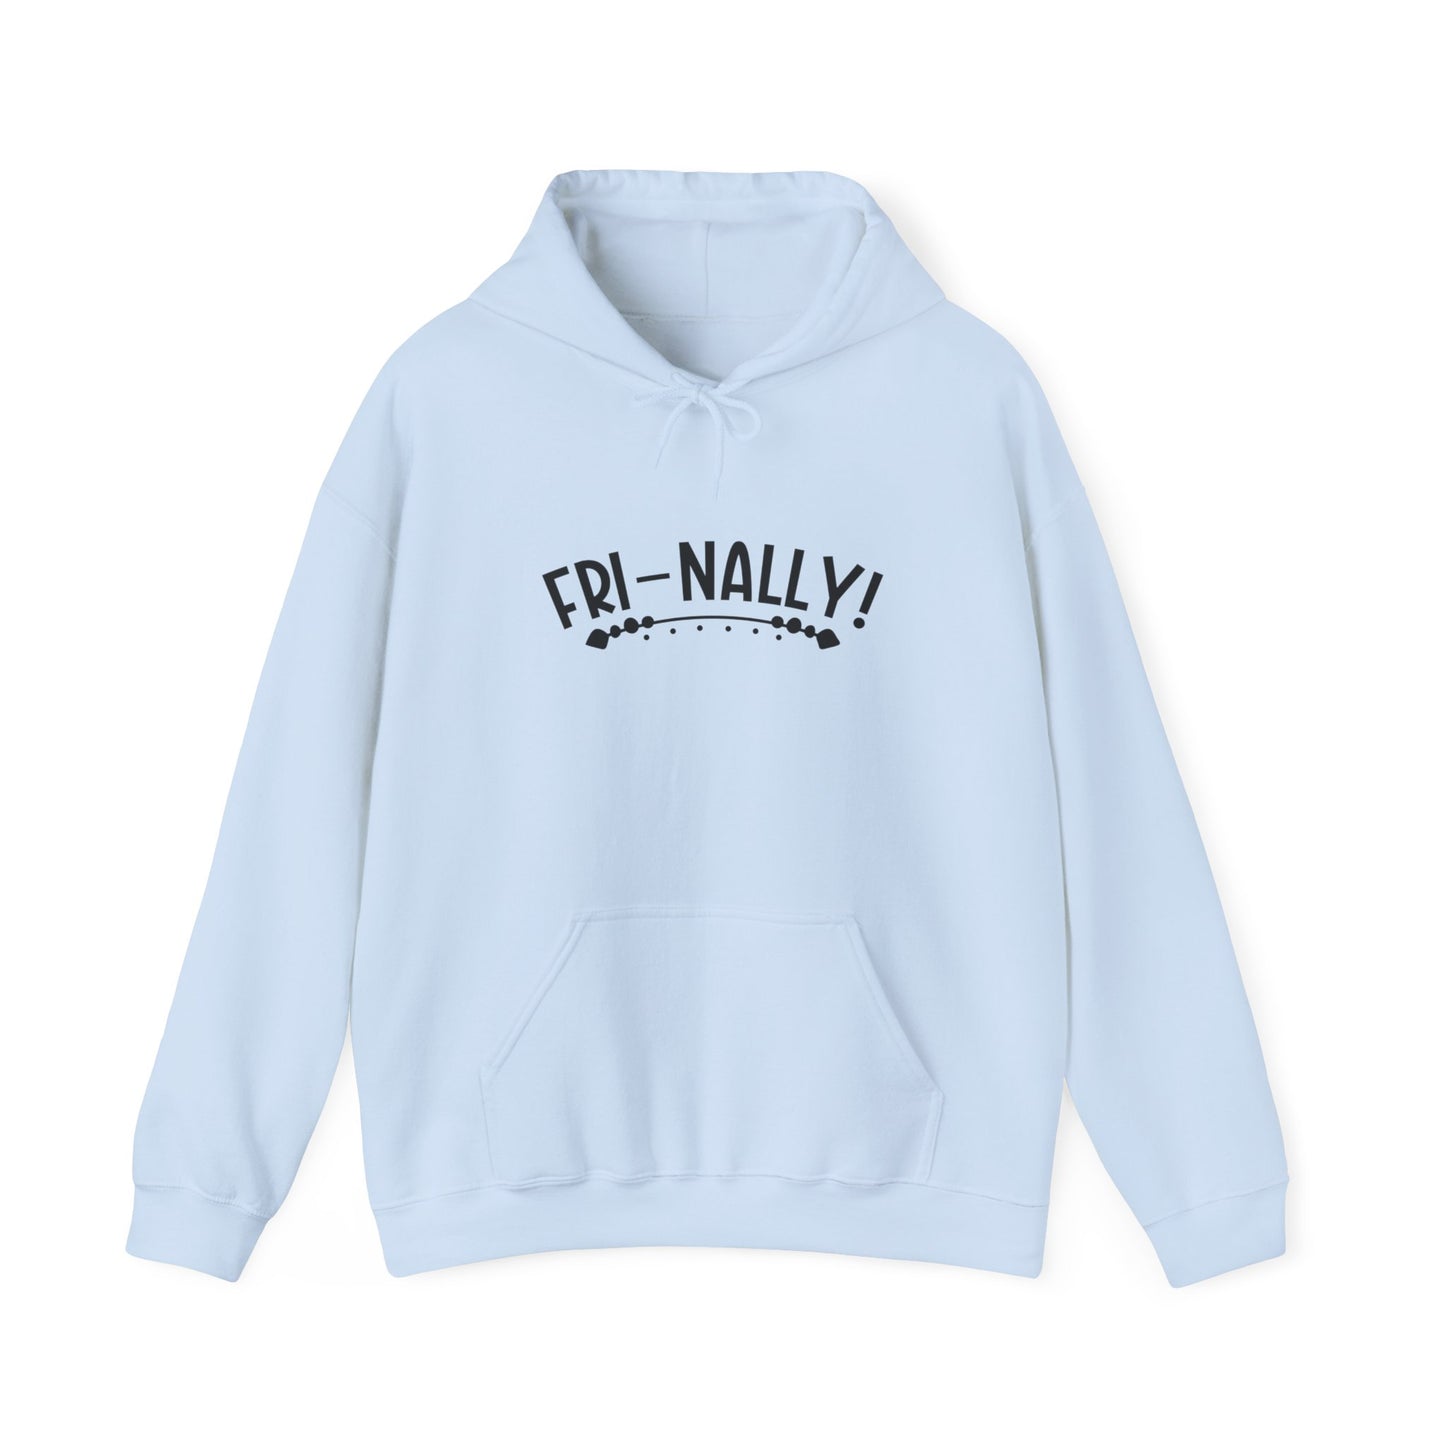 Fri-nally Hooded Sweatshirt (Unisex)